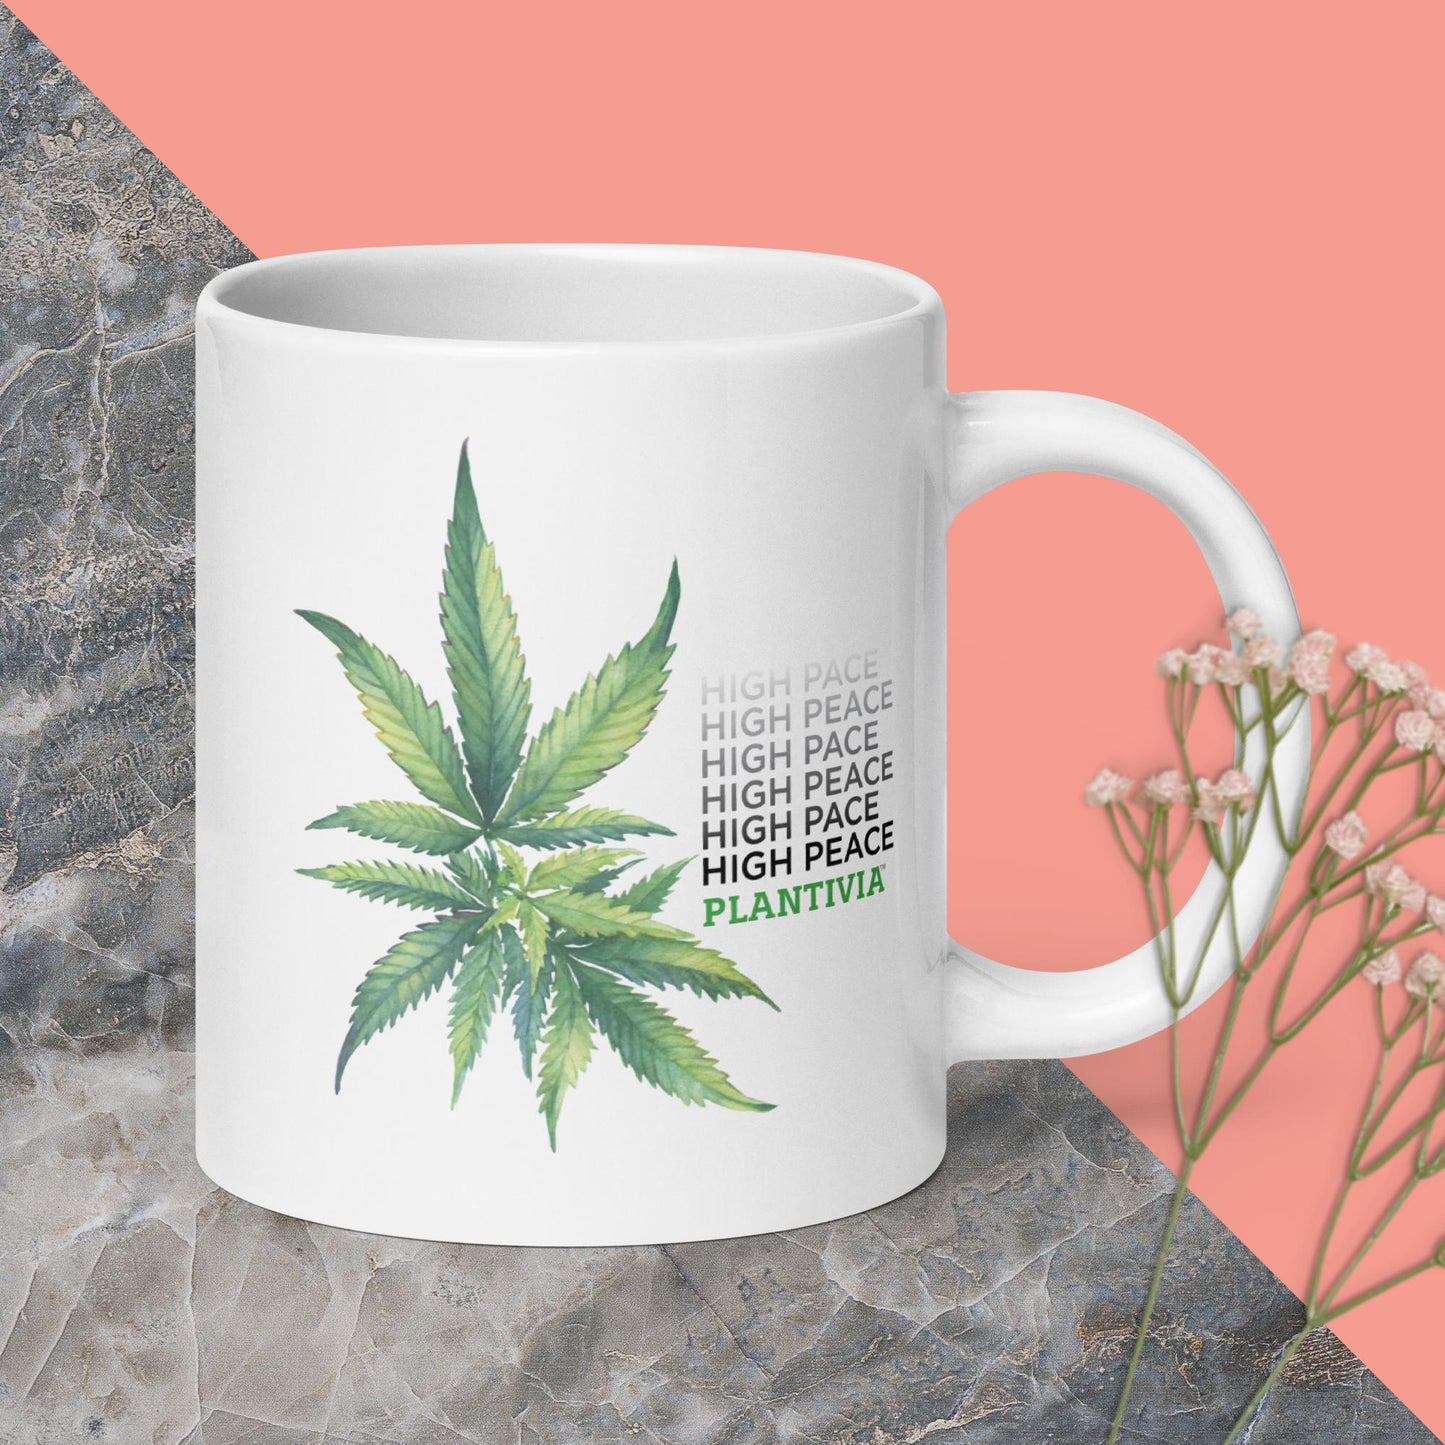 Plantivia HPHP - White glossy mug